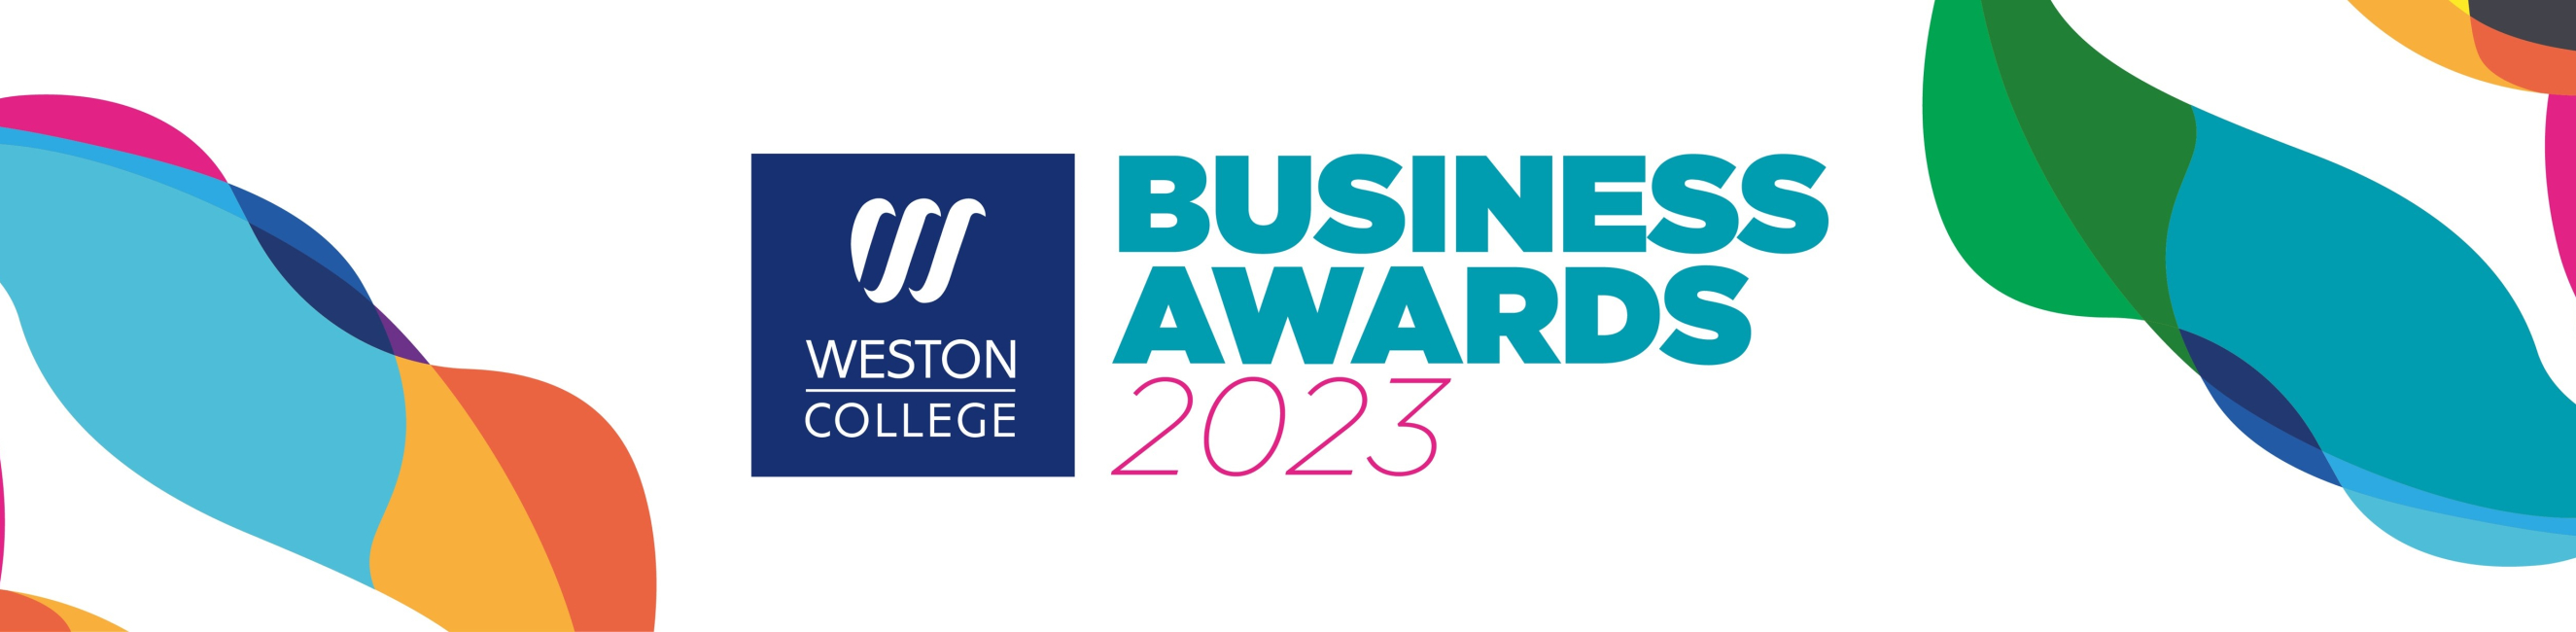 Weston College Business Awards Logo 2023